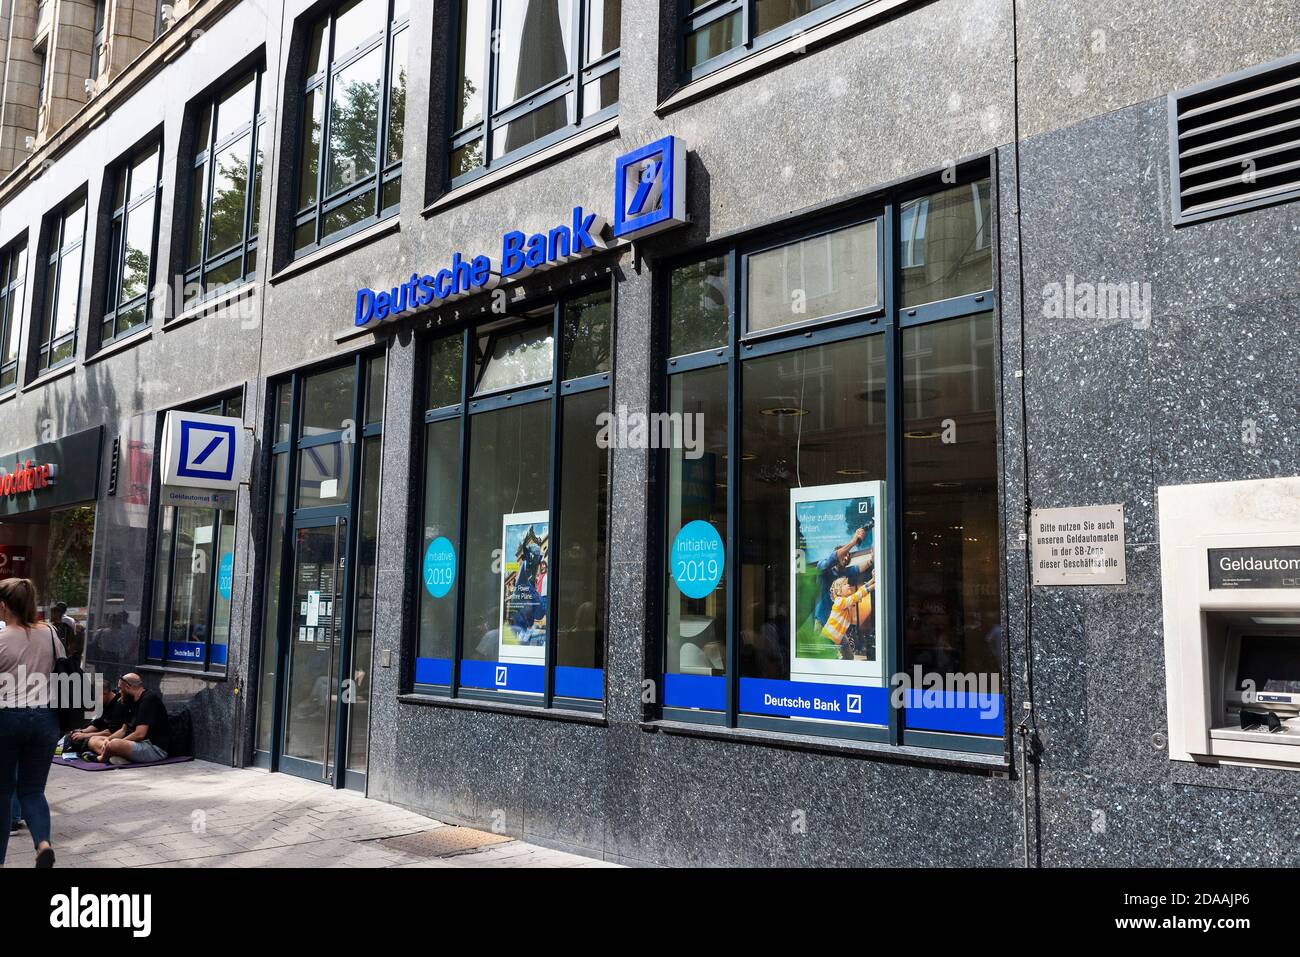 Hamburg, Germany - August 23, 2019: Facade of a Deutsche Bank branch office with people around in Spitalerstraße, shopping street in Altstadt quarter, Stock Photo